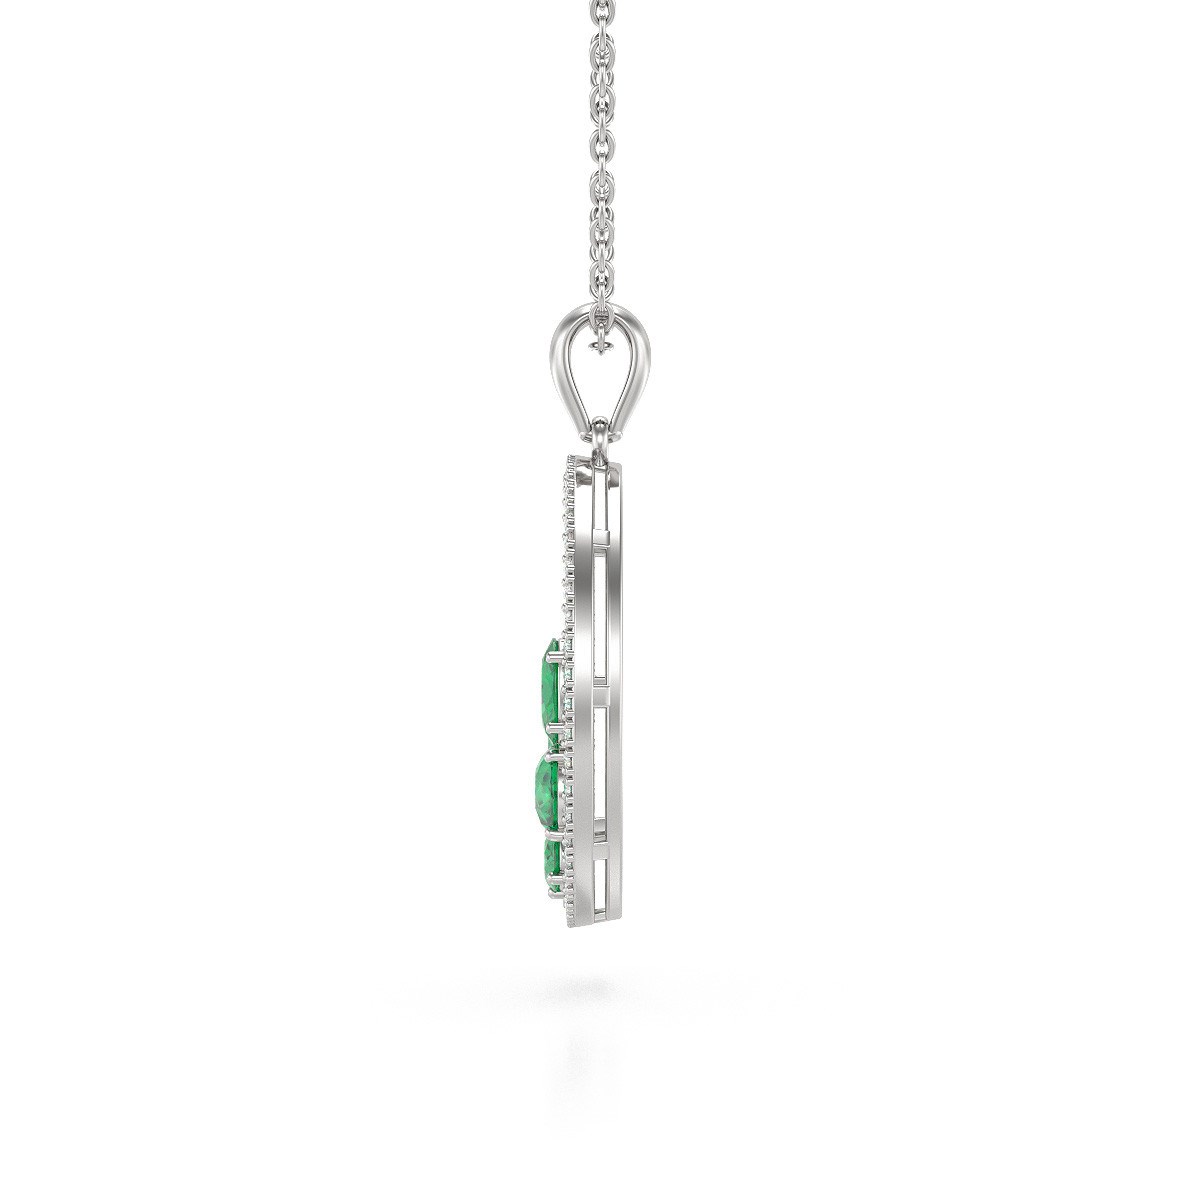 Pendentif Or Blanc 750 & Emeraude | Diamants & Chaine Incluse - Aden - vue 3